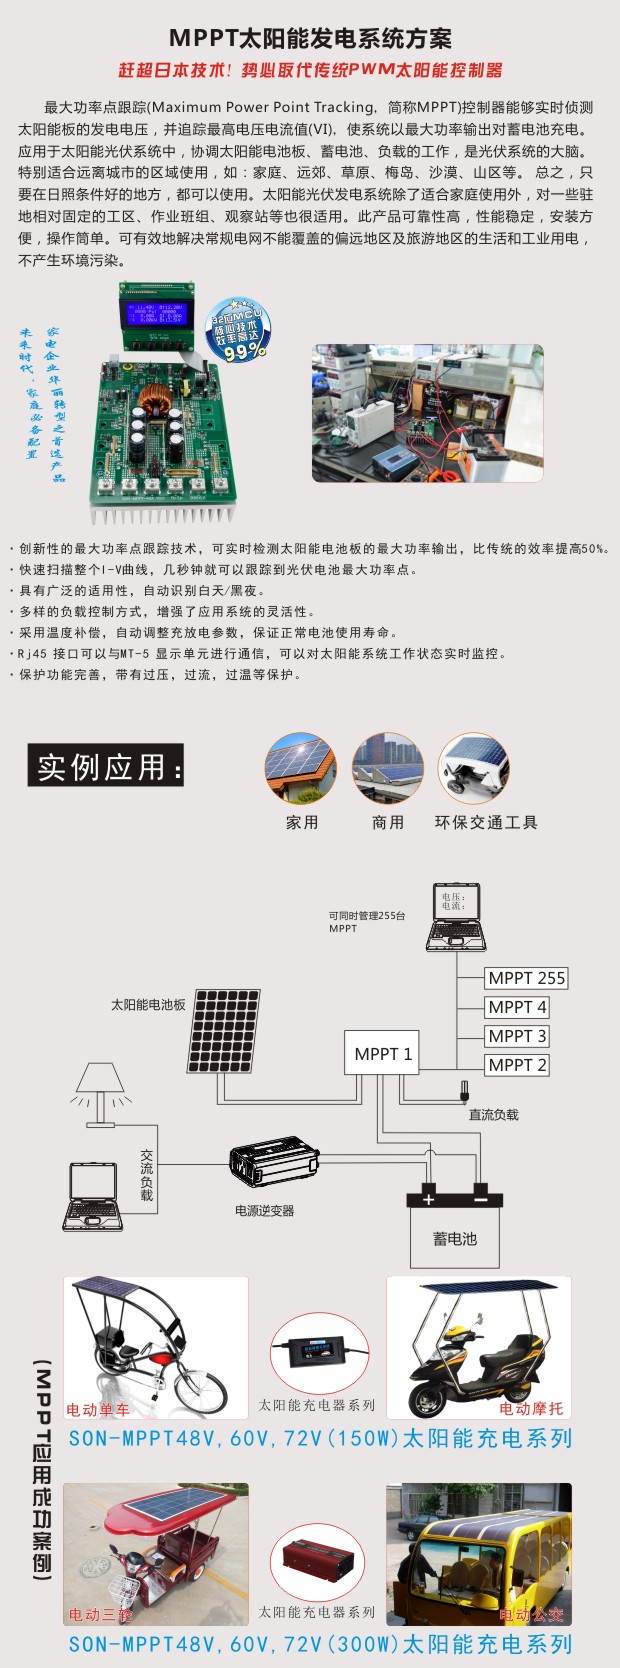 MPPT太阳能发电系统方案